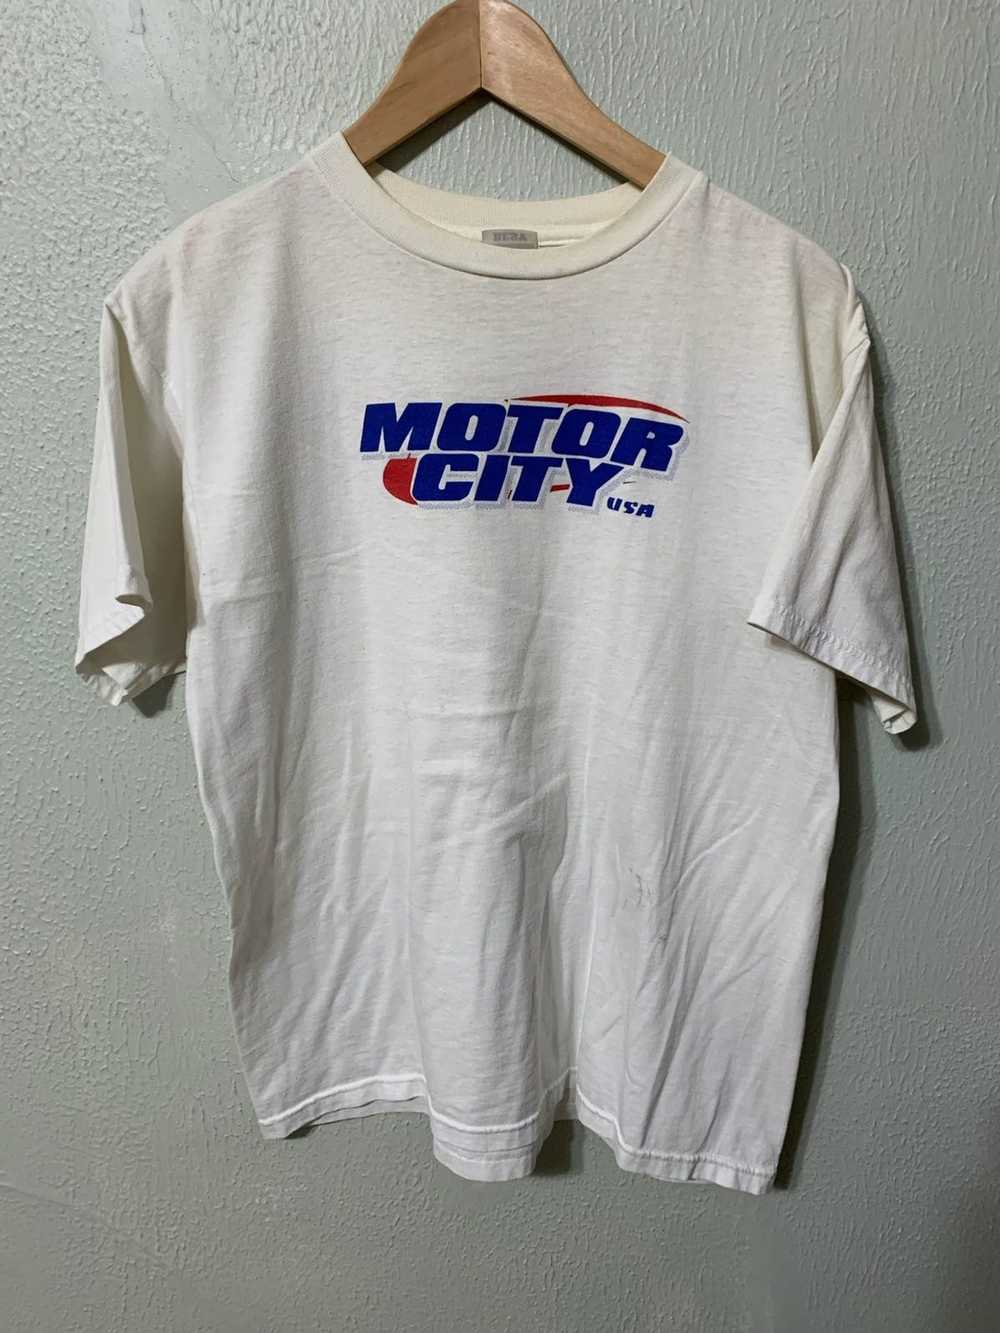 Vintage Vintage Motor City USA T-Shirt - image 1